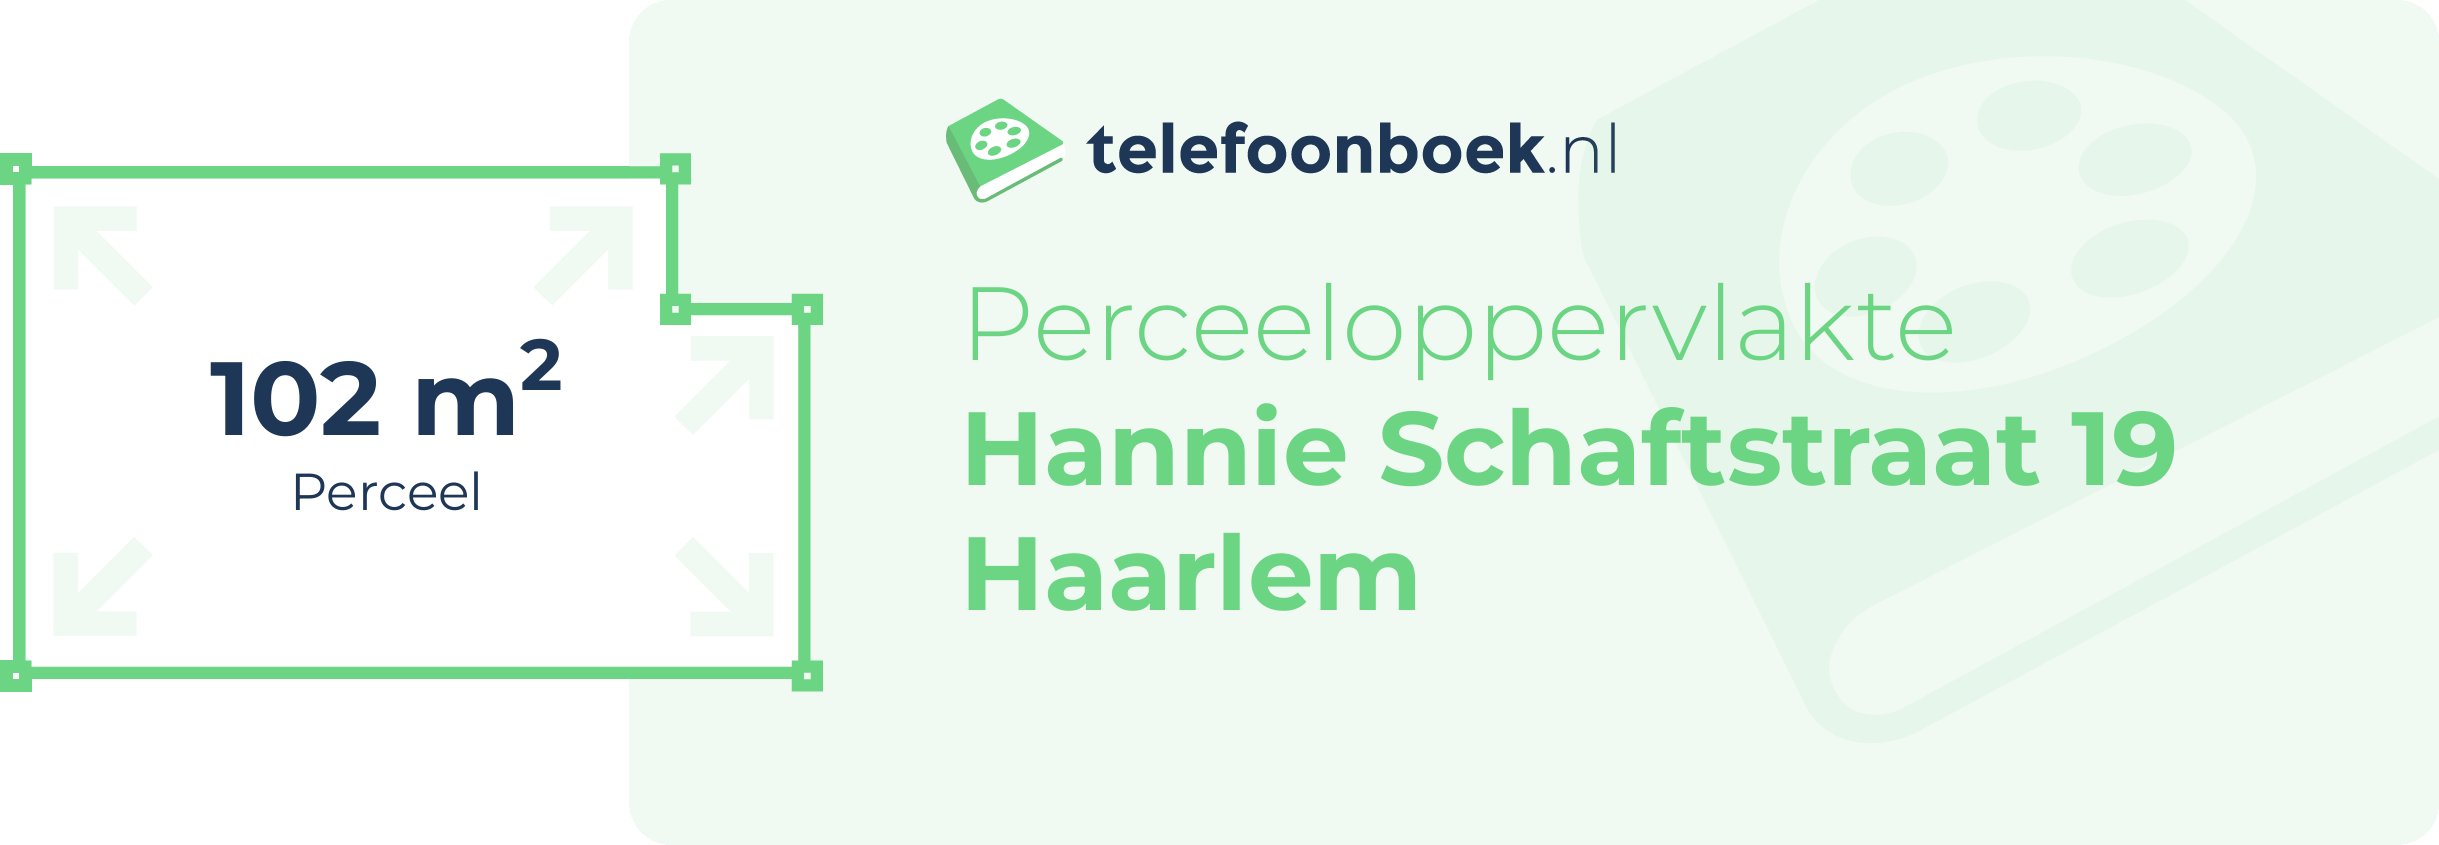 Perceeloppervlakte Hannie Schaftstraat 19 Haarlem